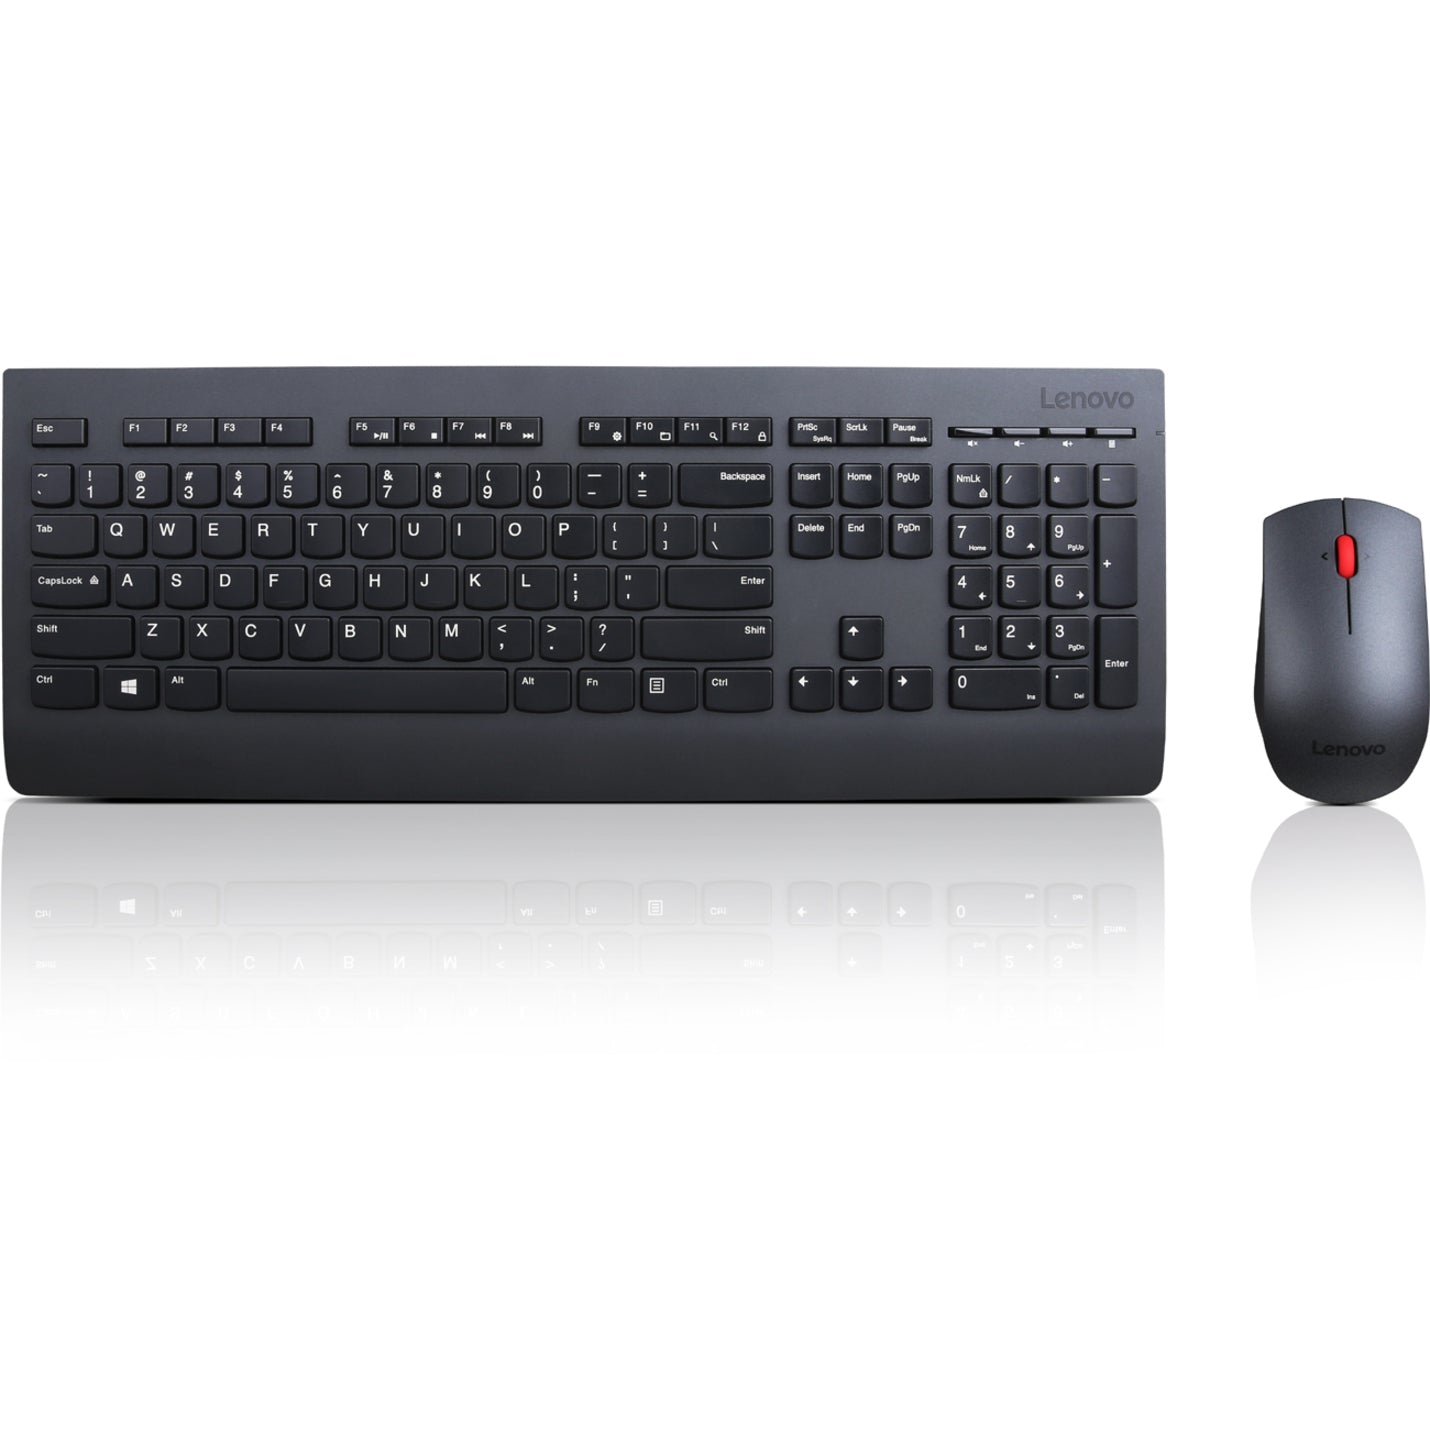 Lenovo 4X30H56796 Professional Wireless Keyboard and Mouse Combo, 2 Year Limited Warranty, Full-size Keyboard, LED Indicator, Plug & Play